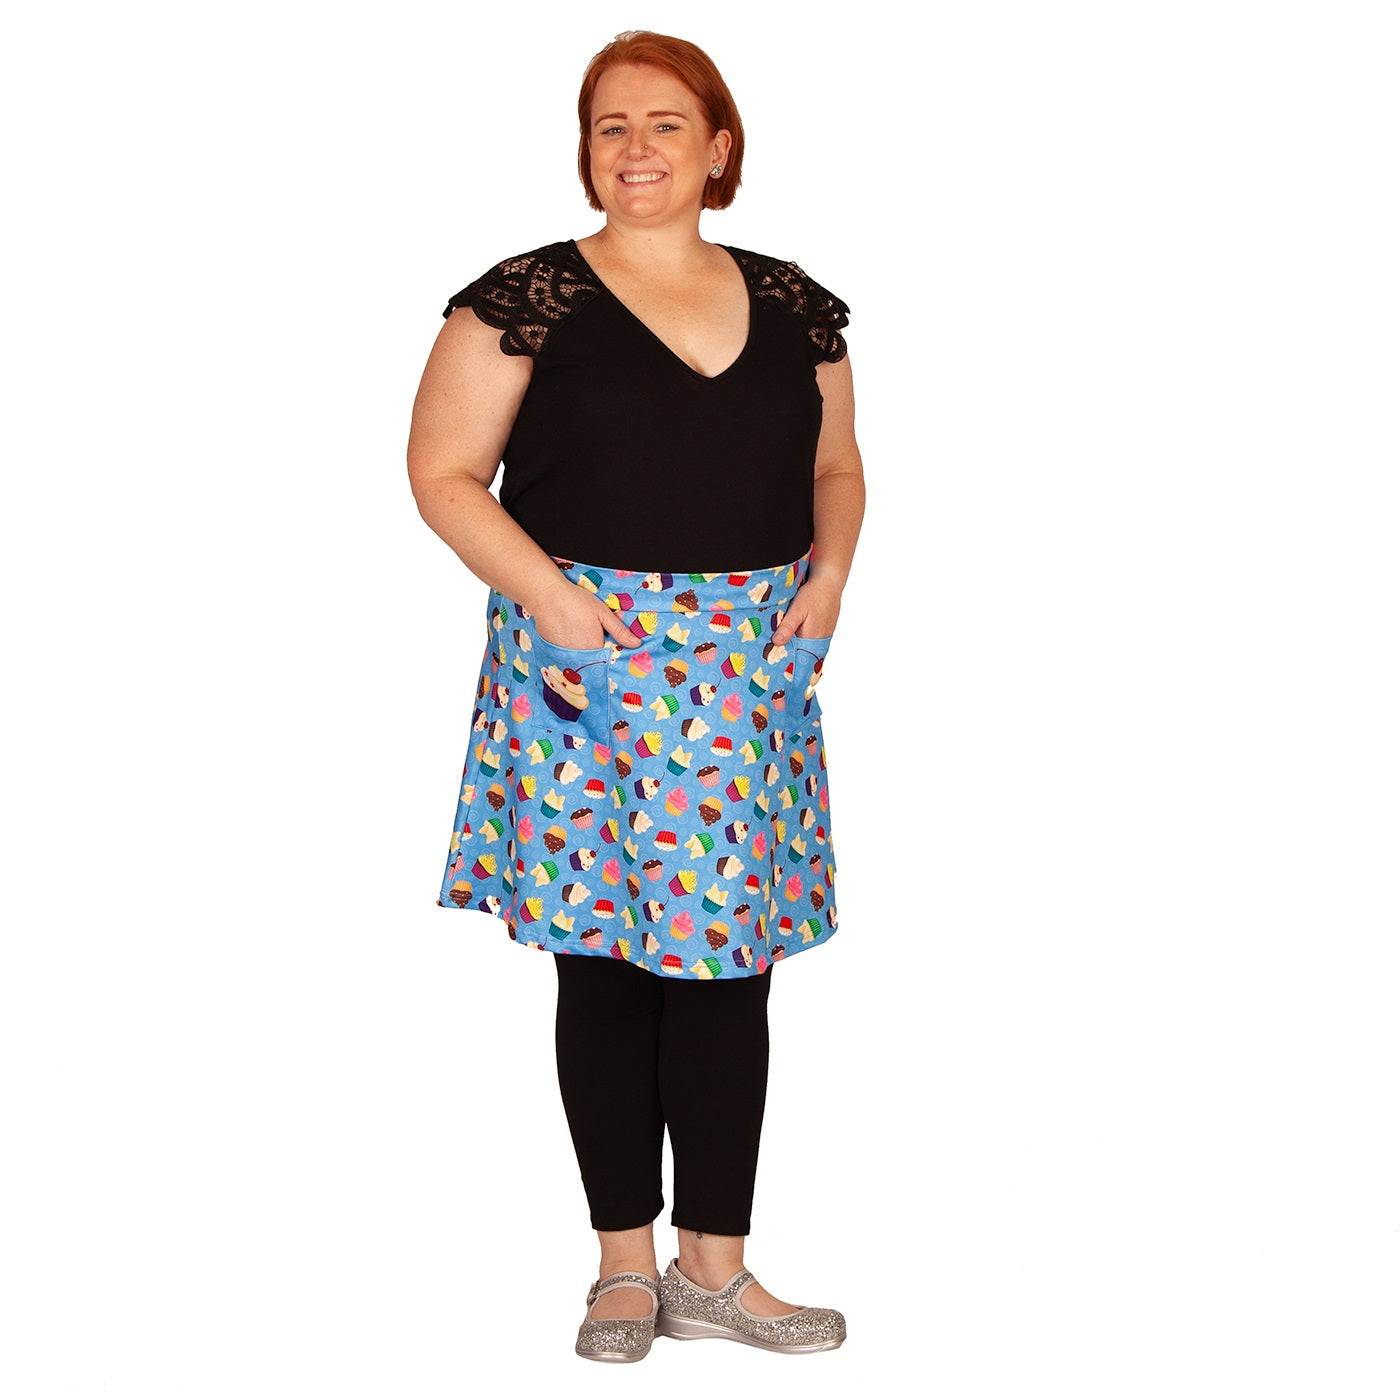 Patty Cakes Short Skirt by RainbowsAndFairies.com (Cupcakes - High Tea - Cake - Skirt With Pockets - Aline Skirt - Cute Flirty - Vintage Inspired) - SKU: CL_SHORT_PATTY_ORG - Pic 05